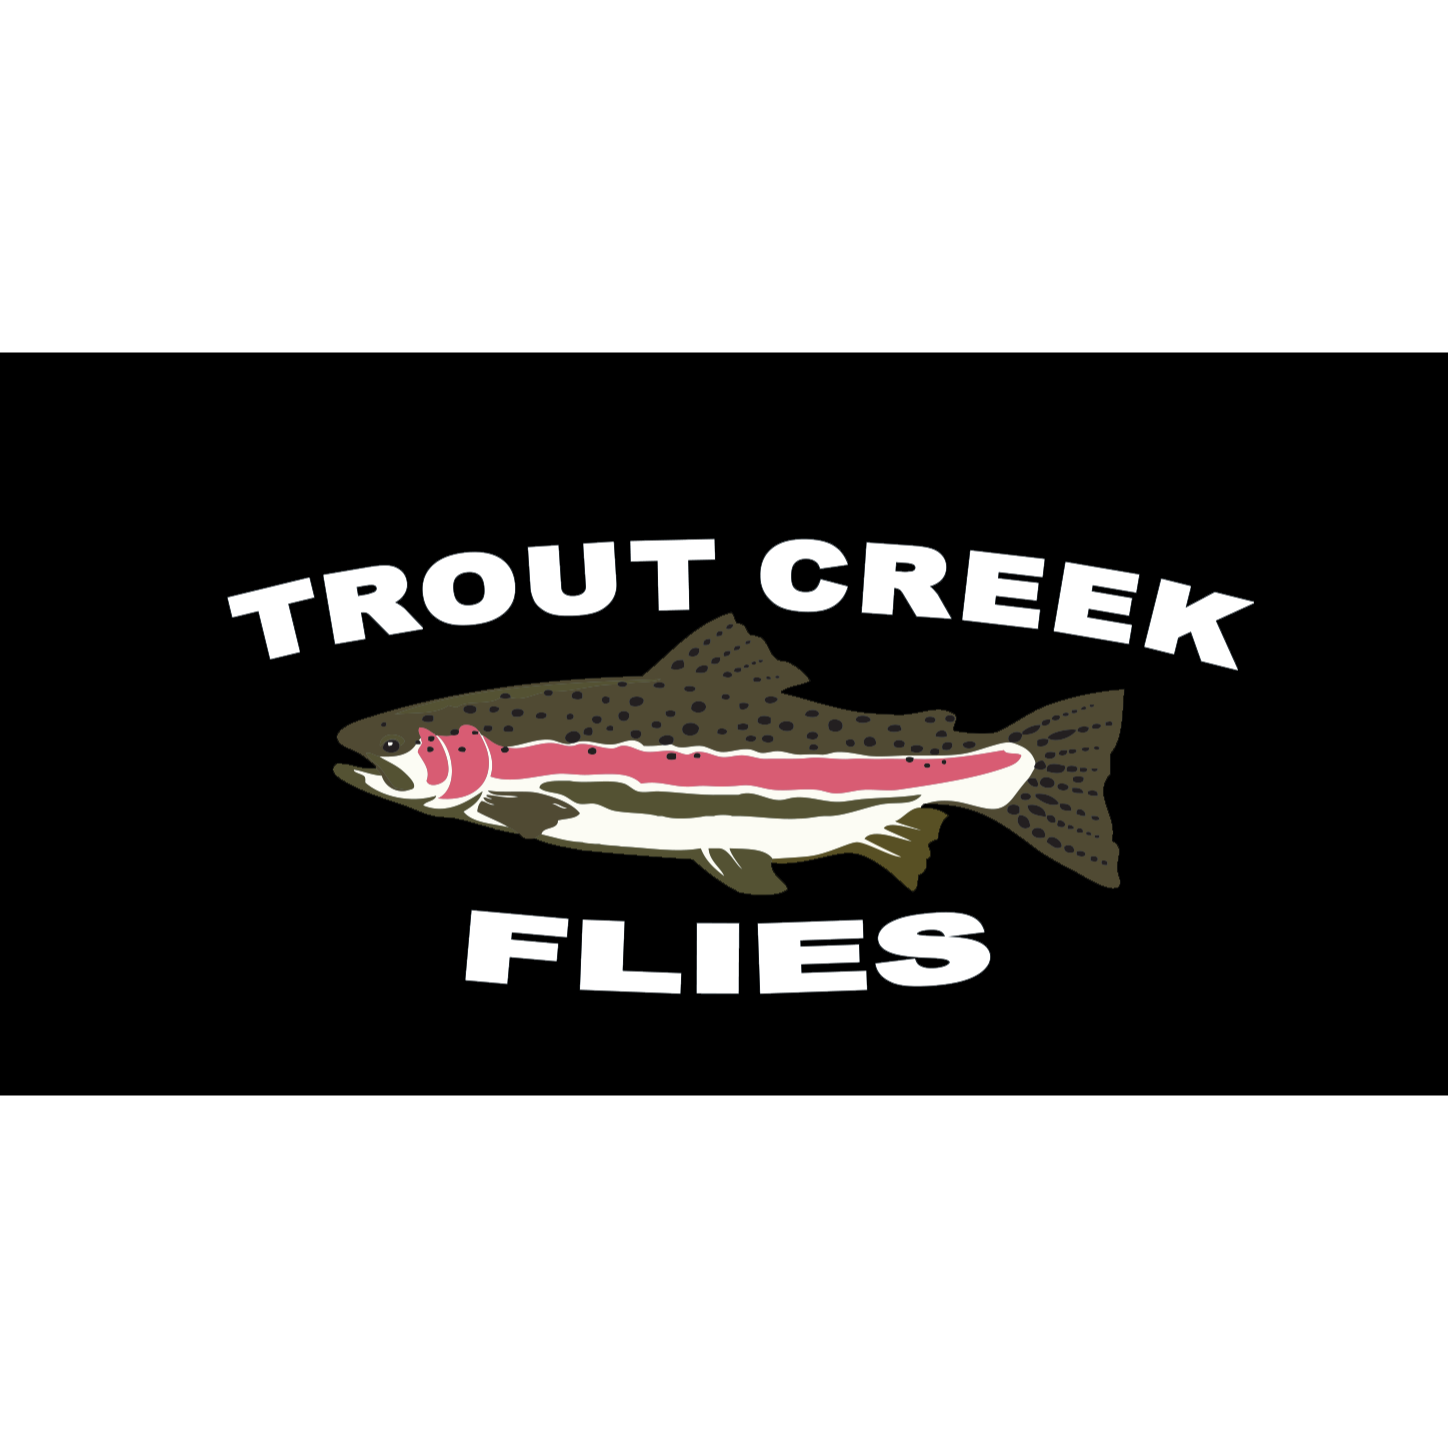 Trout Creek Flies - Dutch John, UT 84023 - (435)885-3355 | ShowMeLocal.com